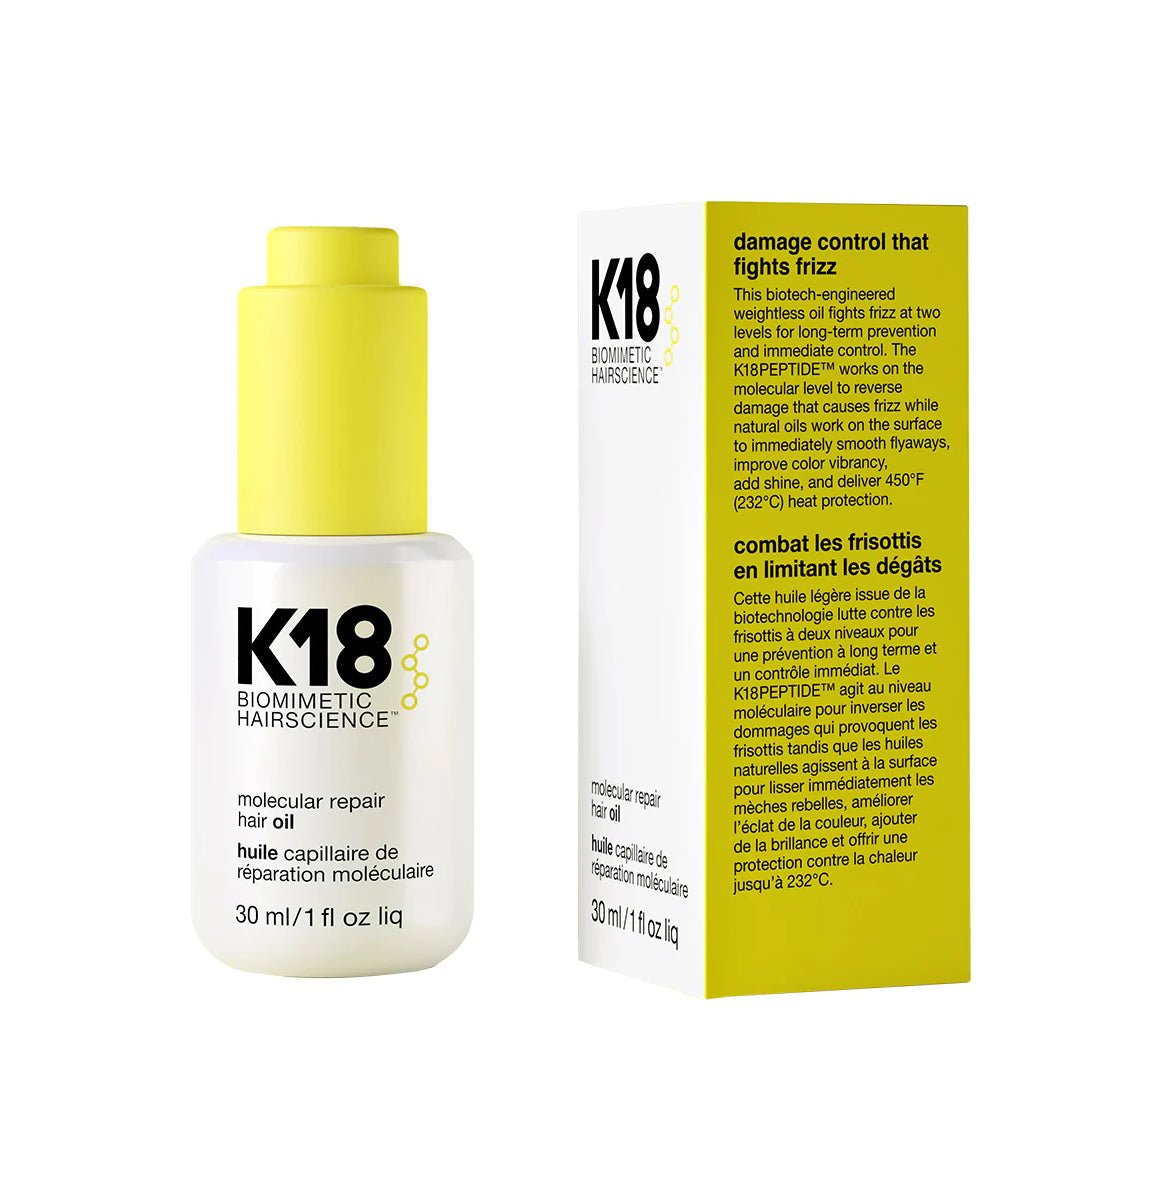 K18 Leave-in Molecular Repair Hair Oil 30ml - Haircare Superstore